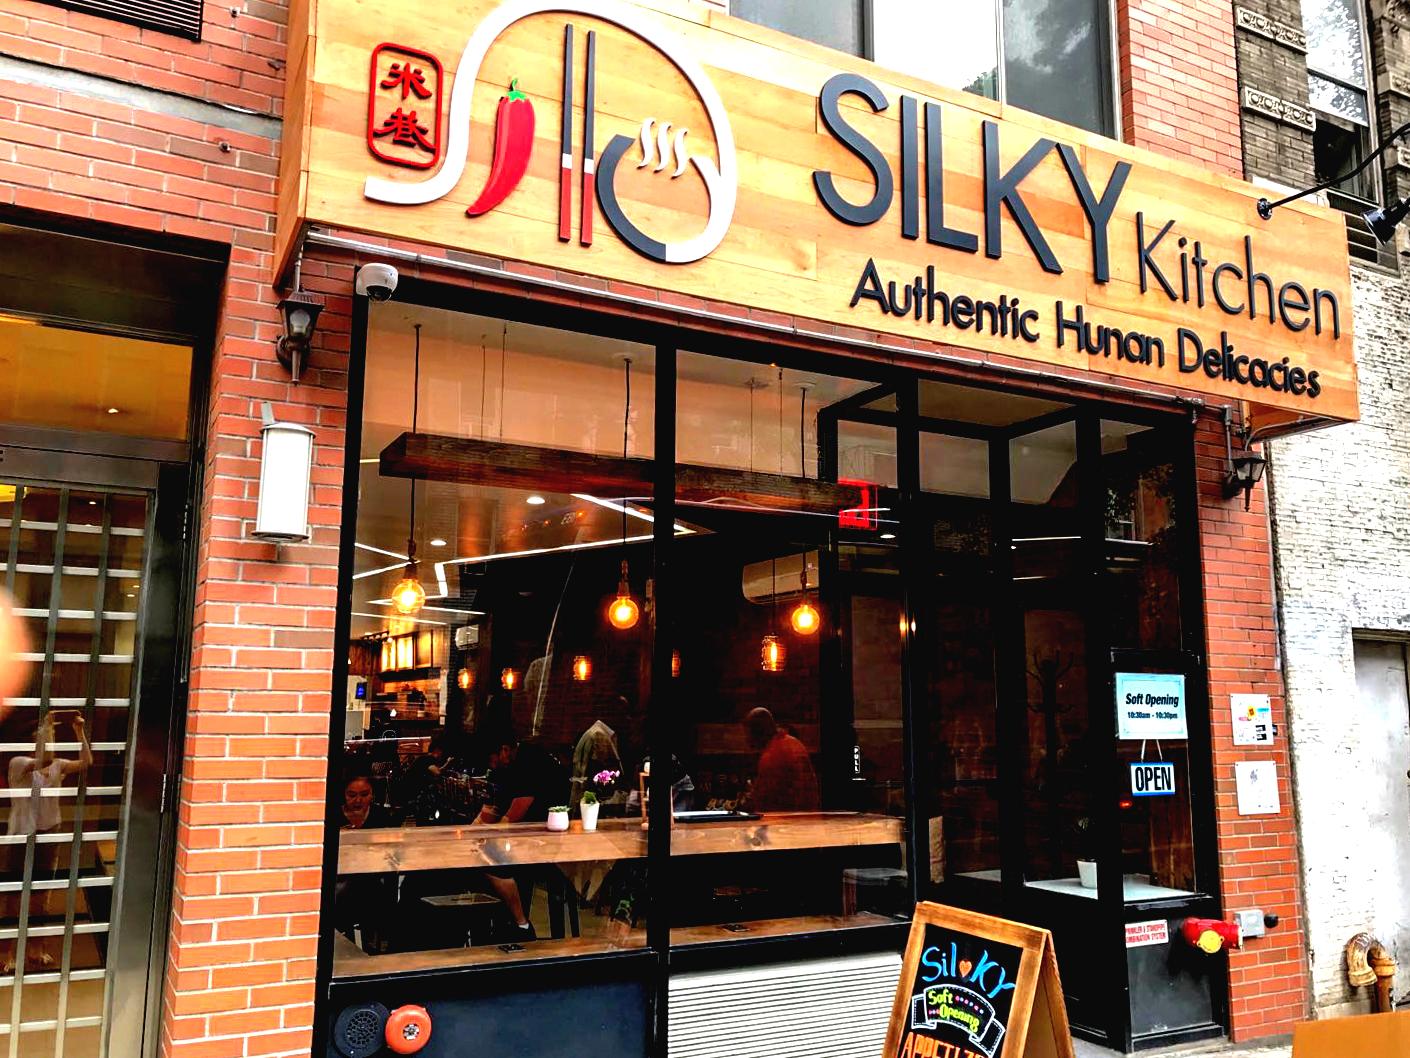 About Silky Kitchen